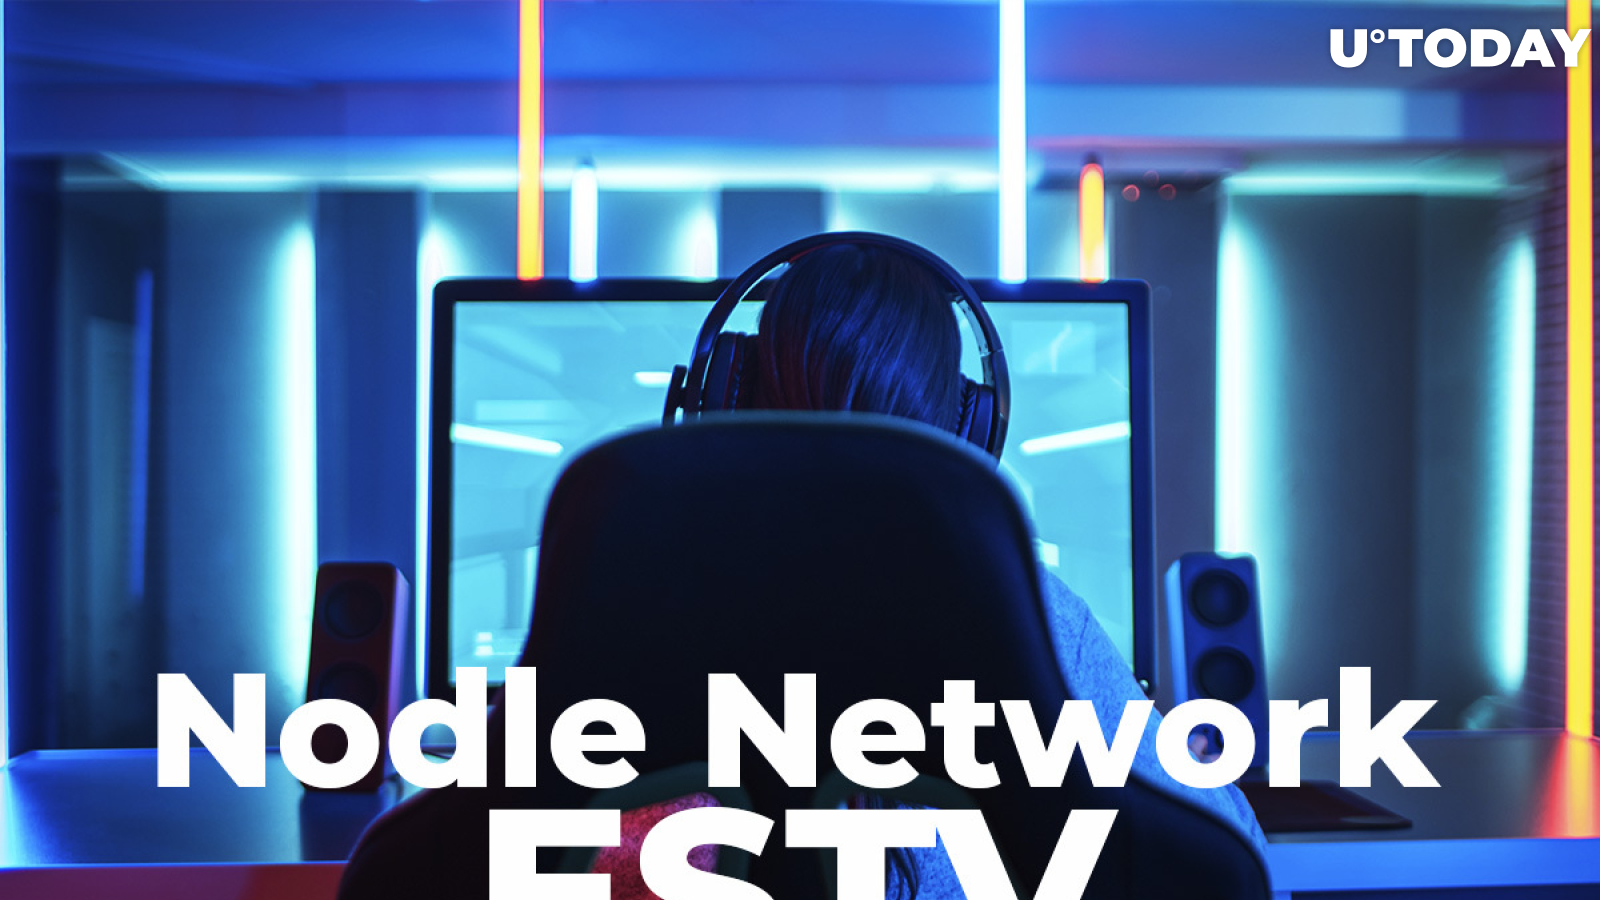 Nodle Network Makes Foray into E-Sports with ESTV Partnership